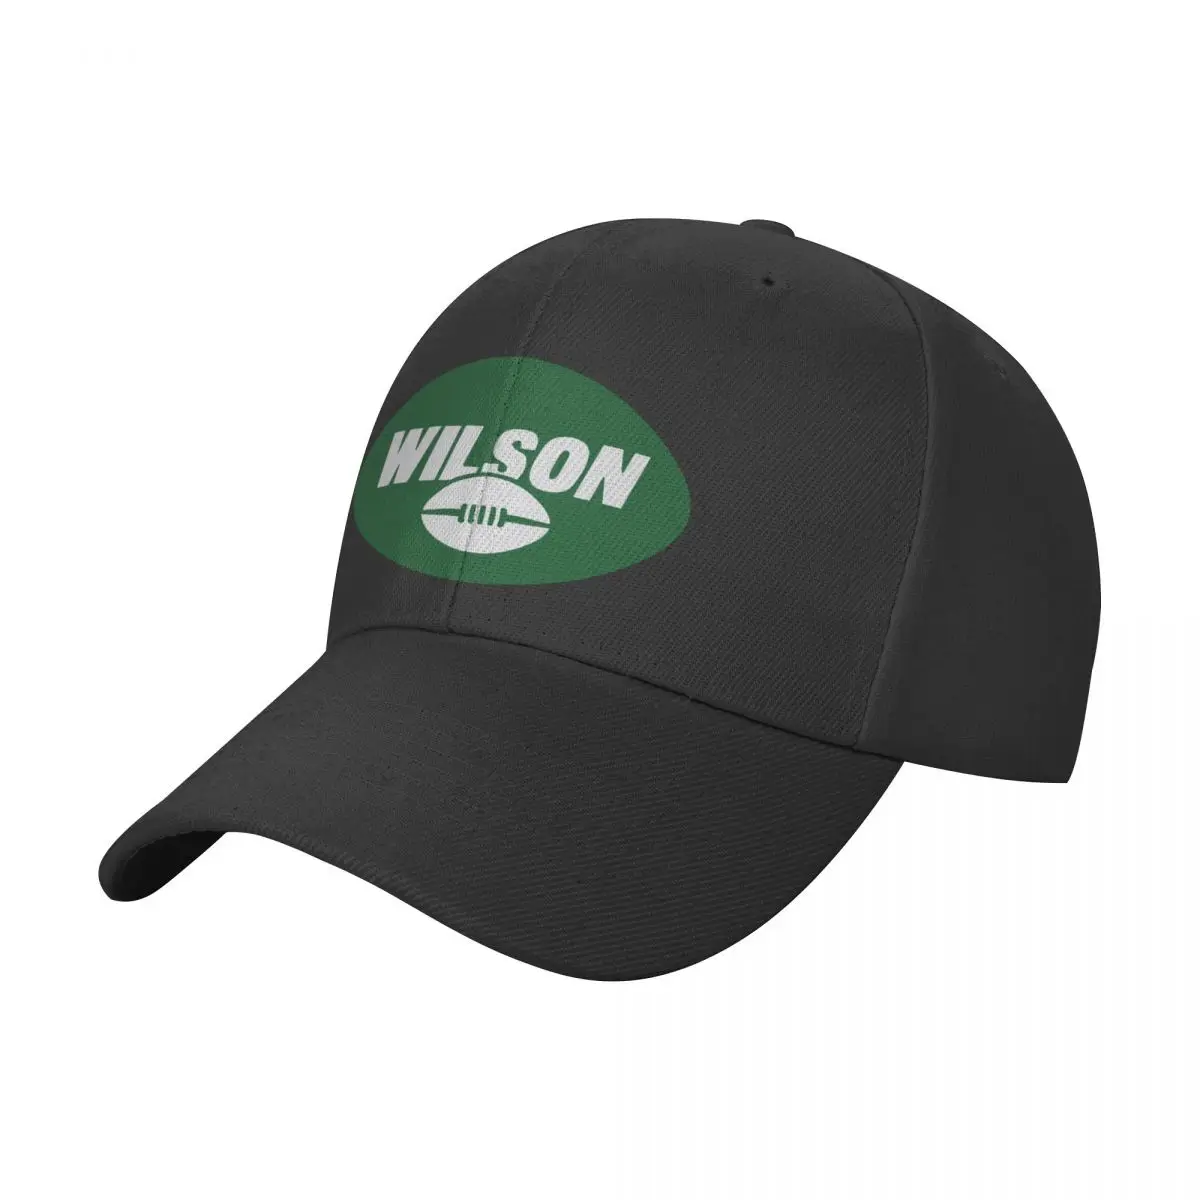 

Men Women Hat Zach Wilson 2 Baseball Cap Wild Sun Shade Peaked Hats Adjustable Caps for Fans 100% Polyester